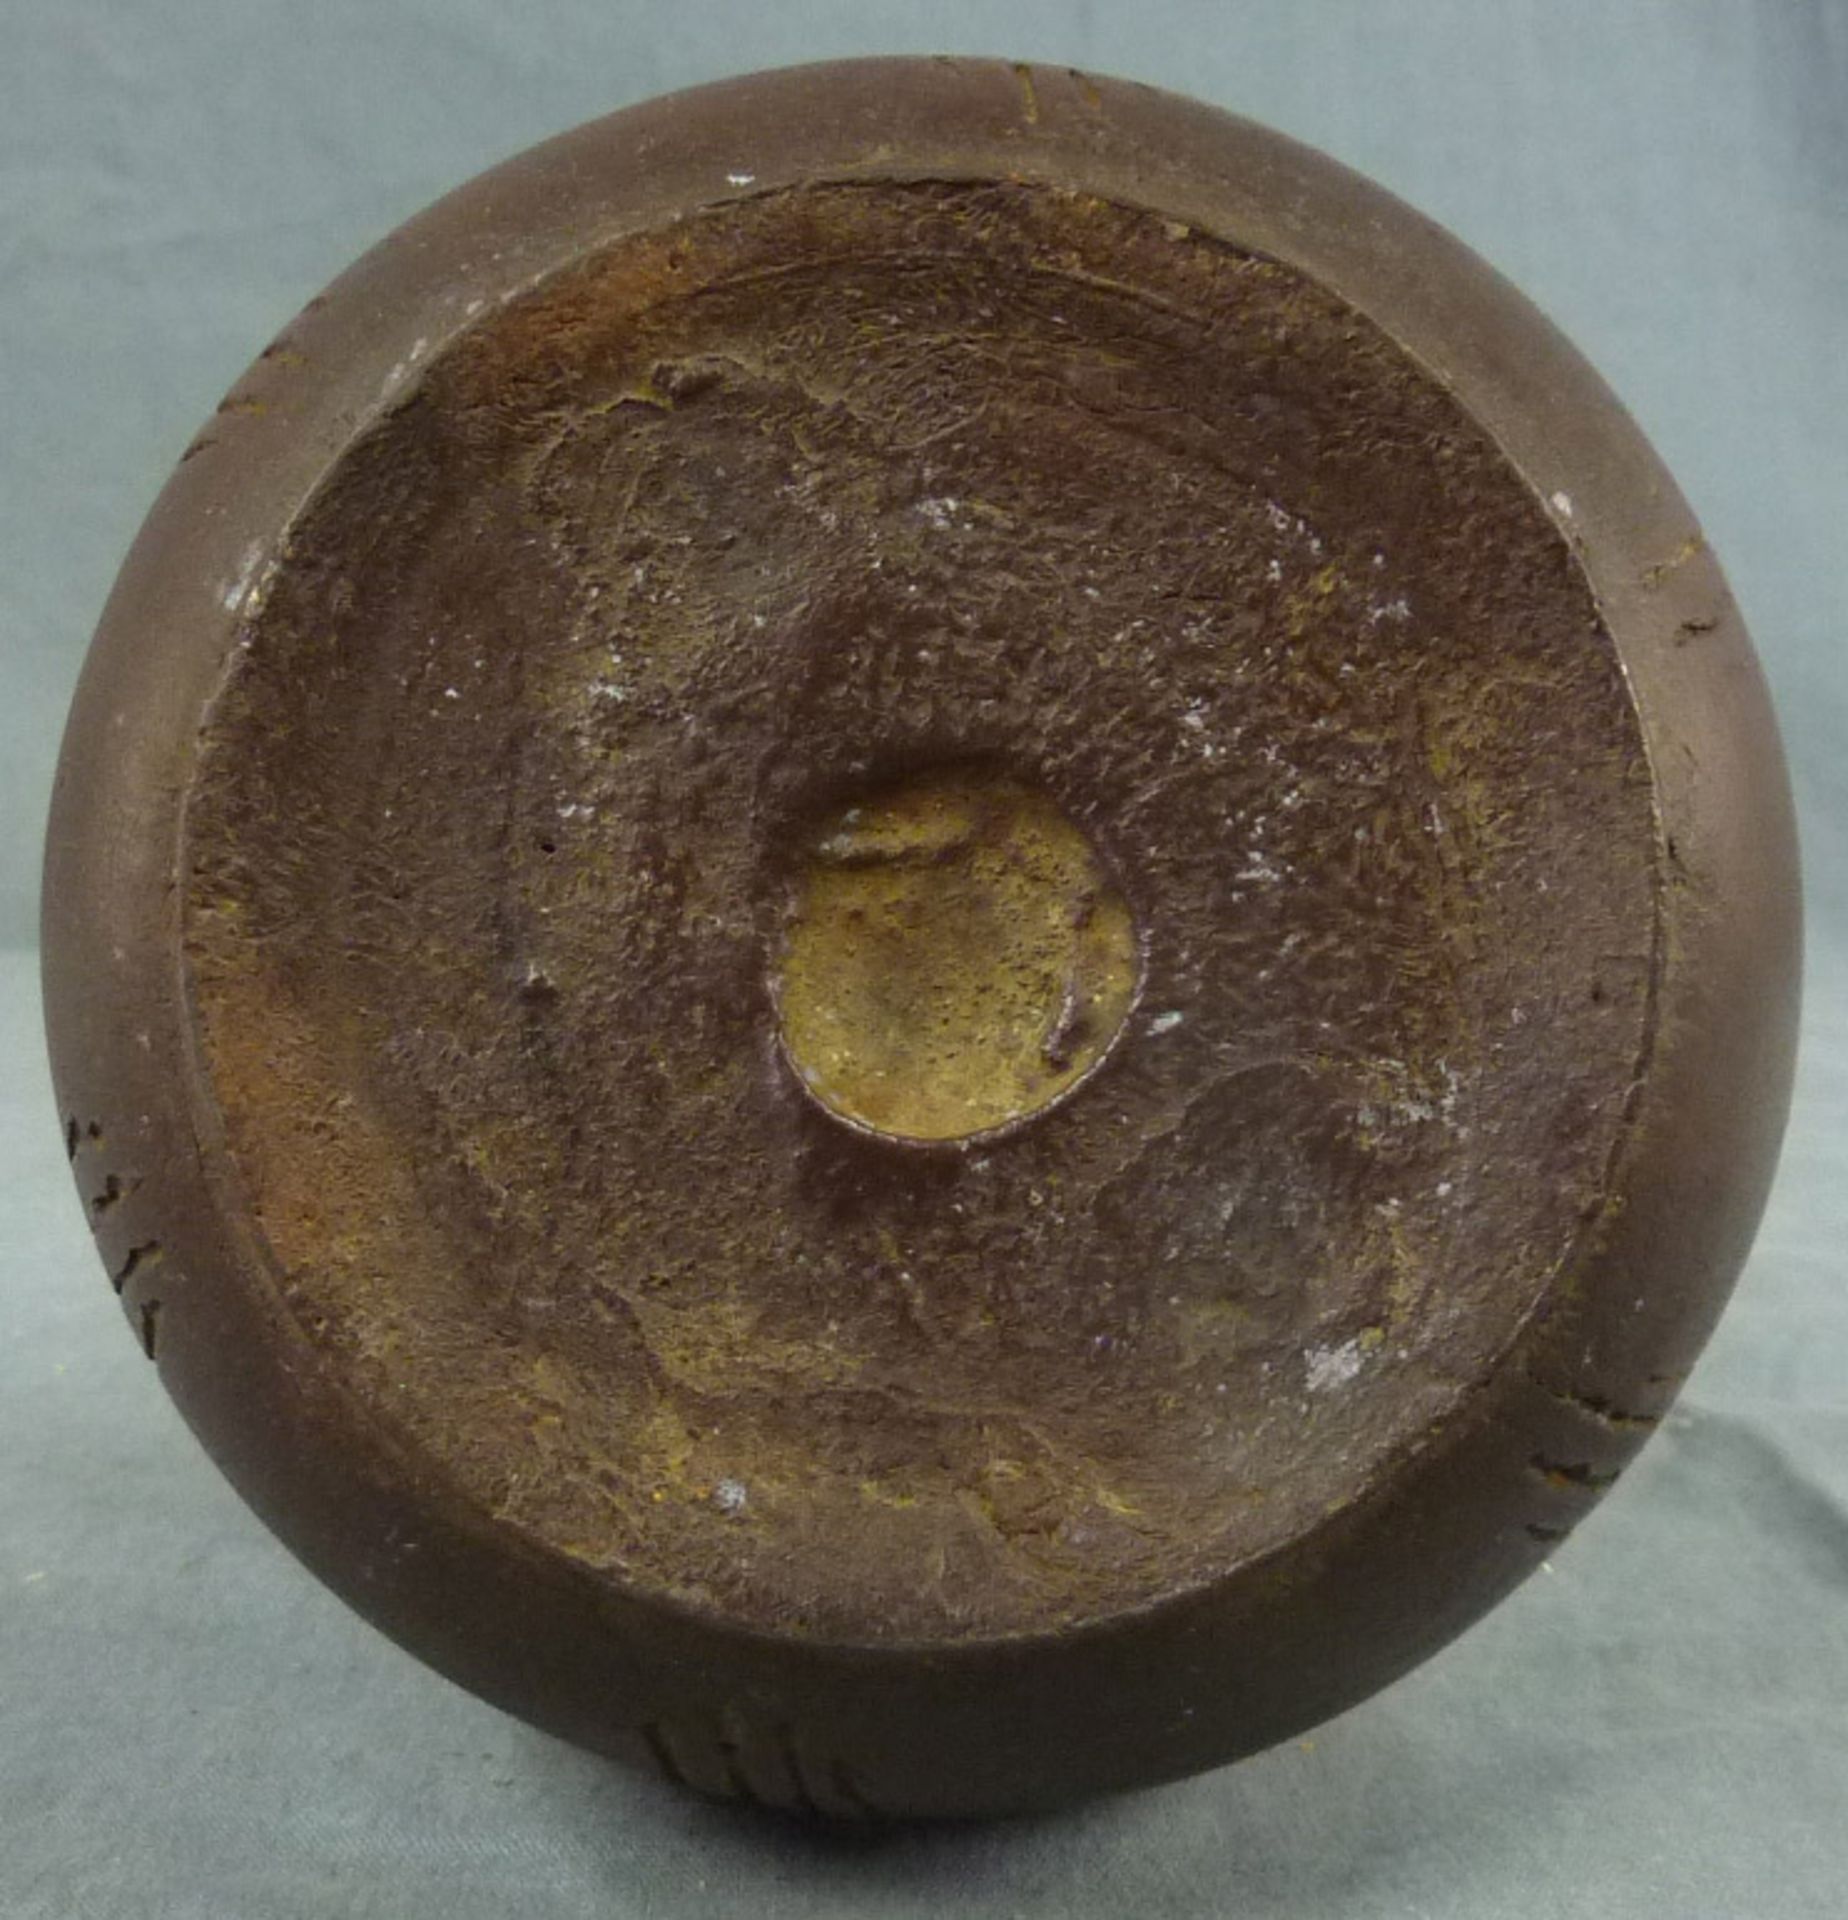 Vase. China / Japan? Bronzed. Inscriptions. Cast iron?17 cm high.Vase. Wohl China / Japan. - Bild 6 aus 8